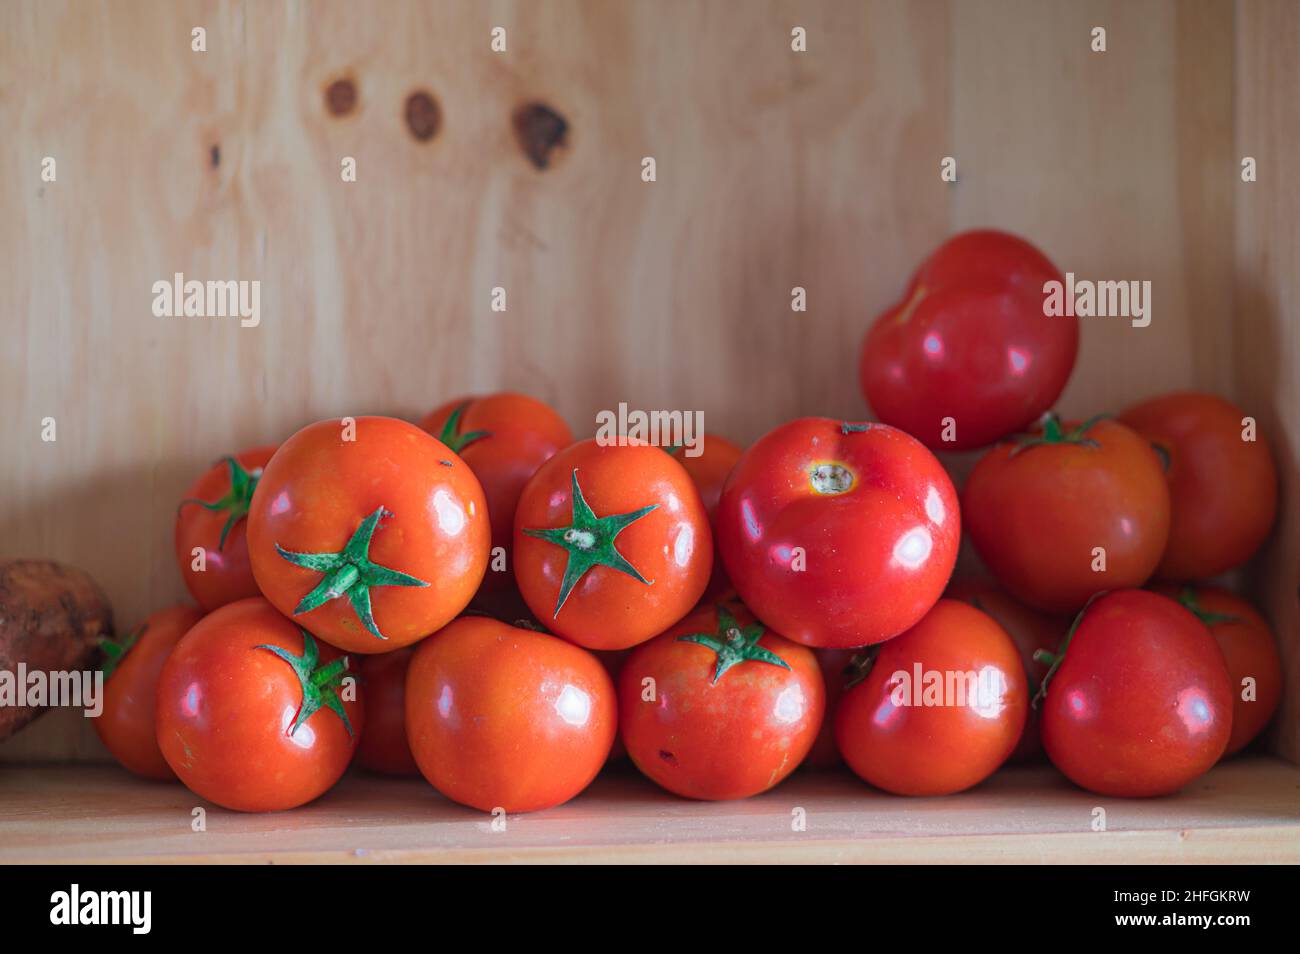 Grupo de tomates apilados en caja de madera Foto de stock